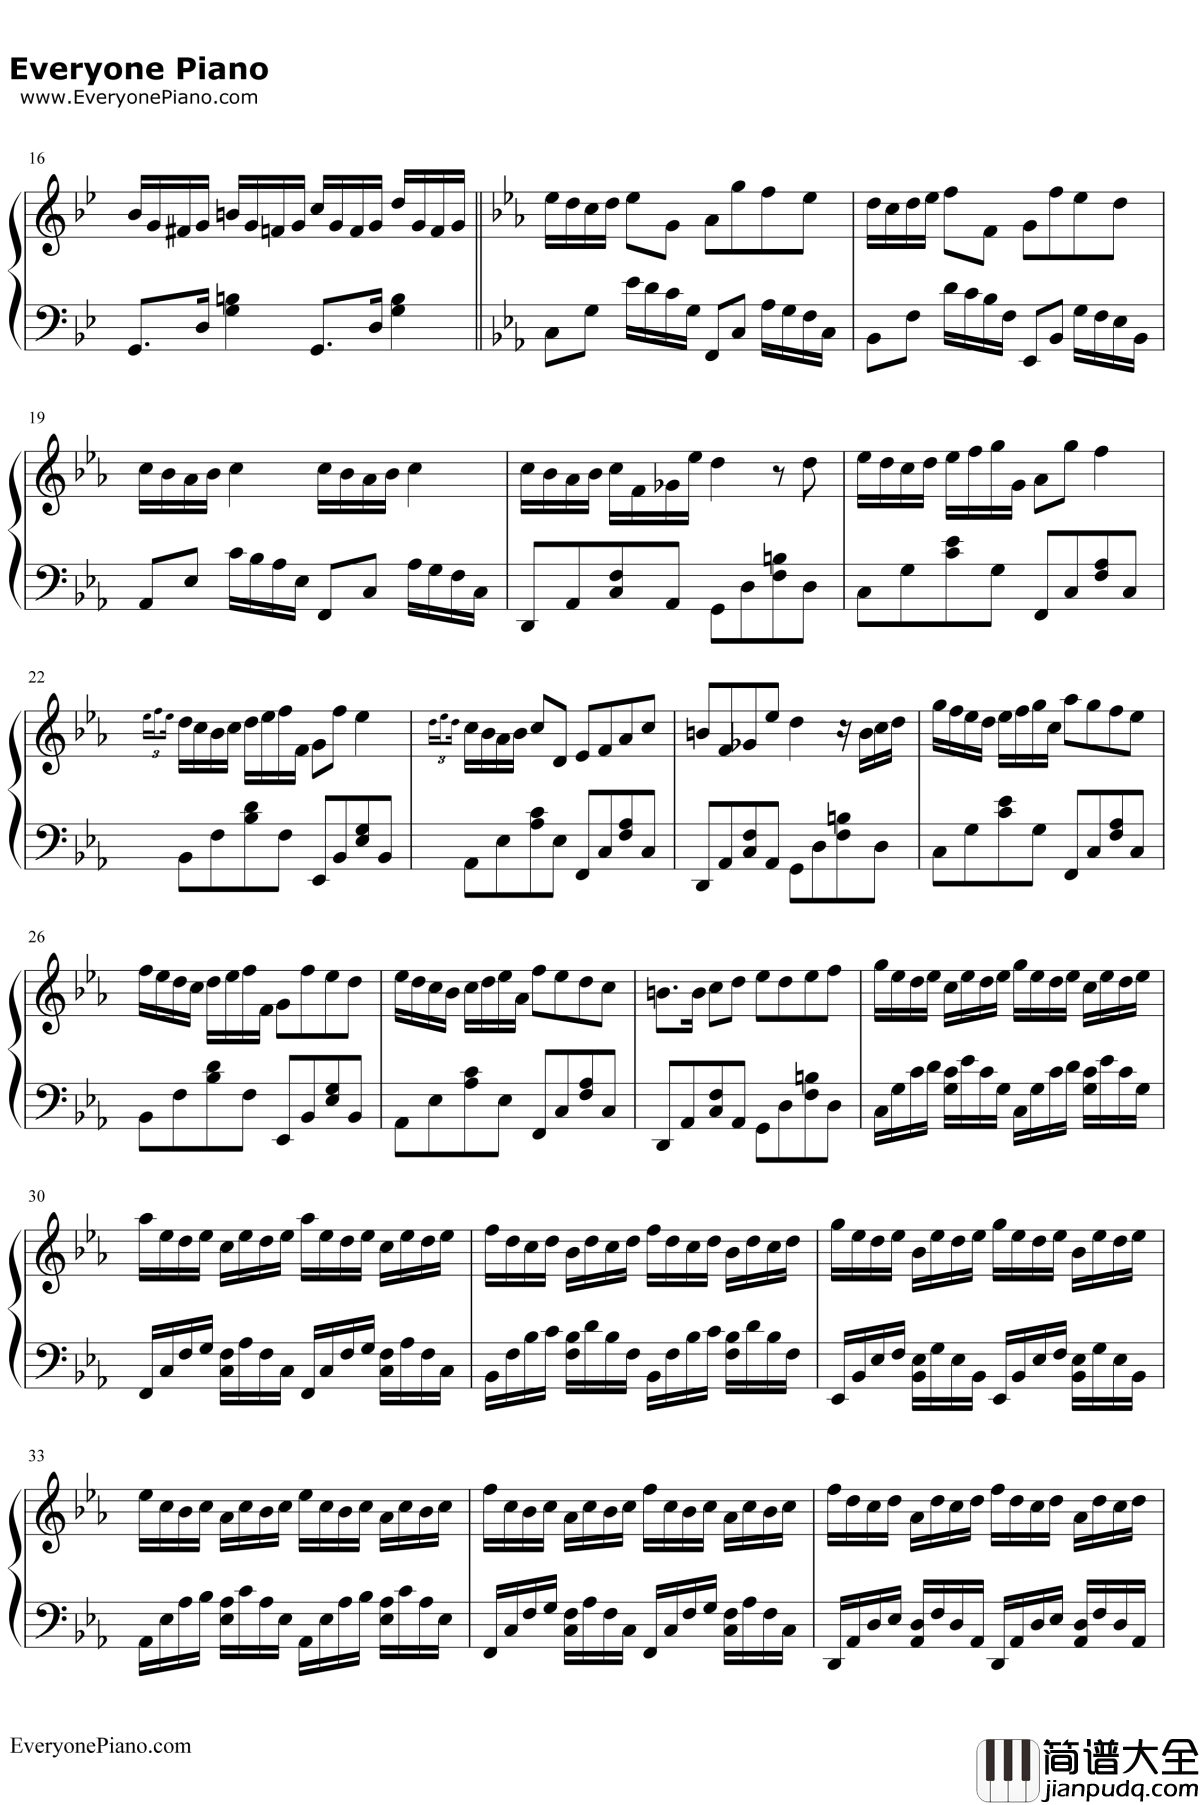 g小调的巴赫钢琴谱_巴赫_平均律变奏曲